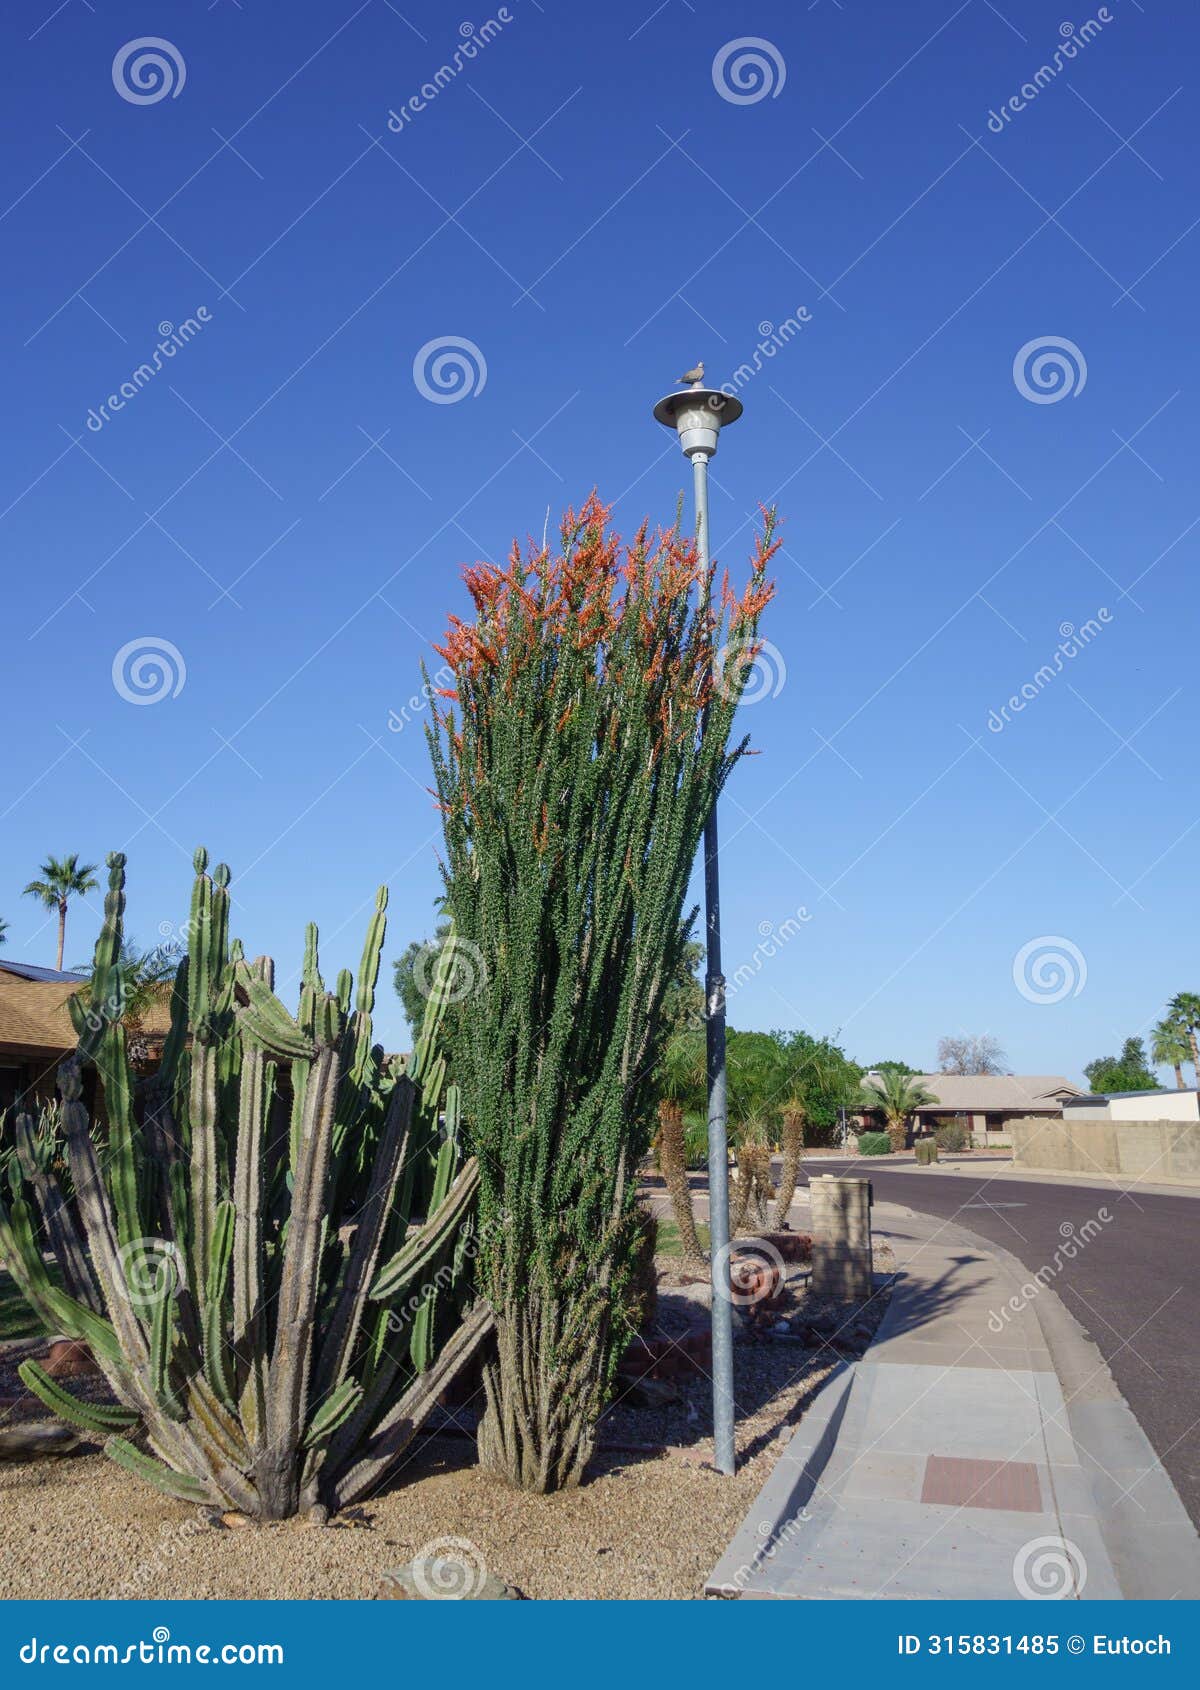 cereus cacti and blooming ocotillo in arizona xeriscaping